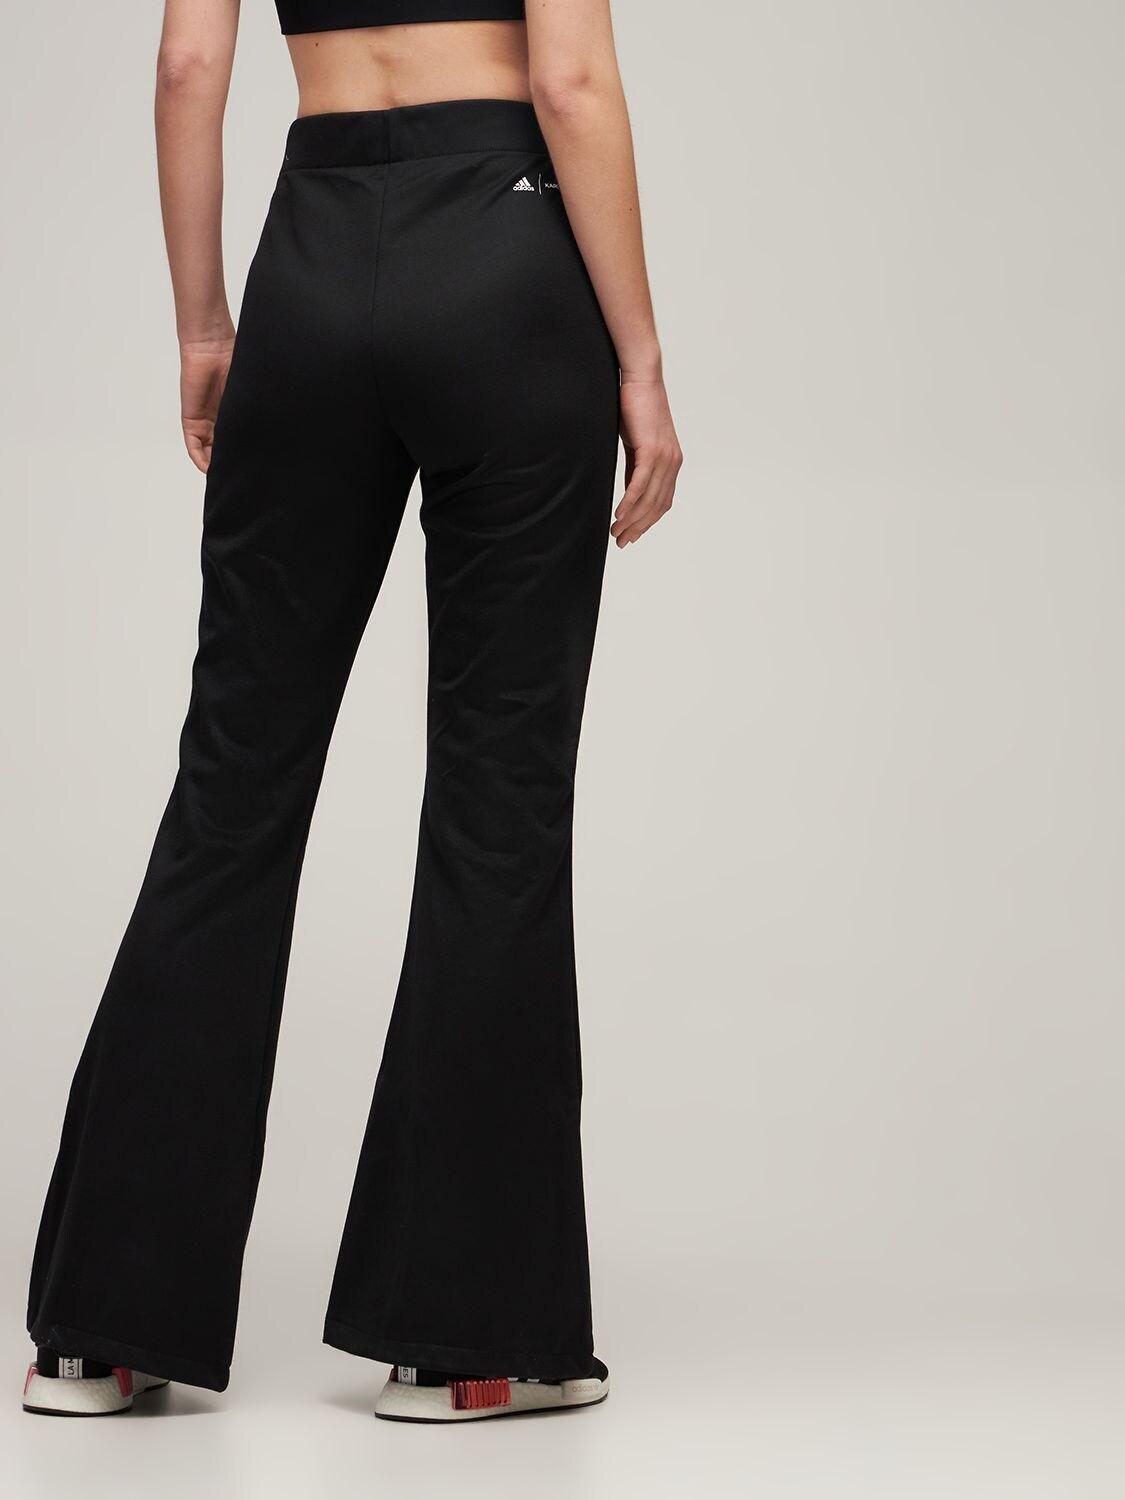 adidas Originals Karlie Kloss High Waist Flared Pants in Black | Lyst